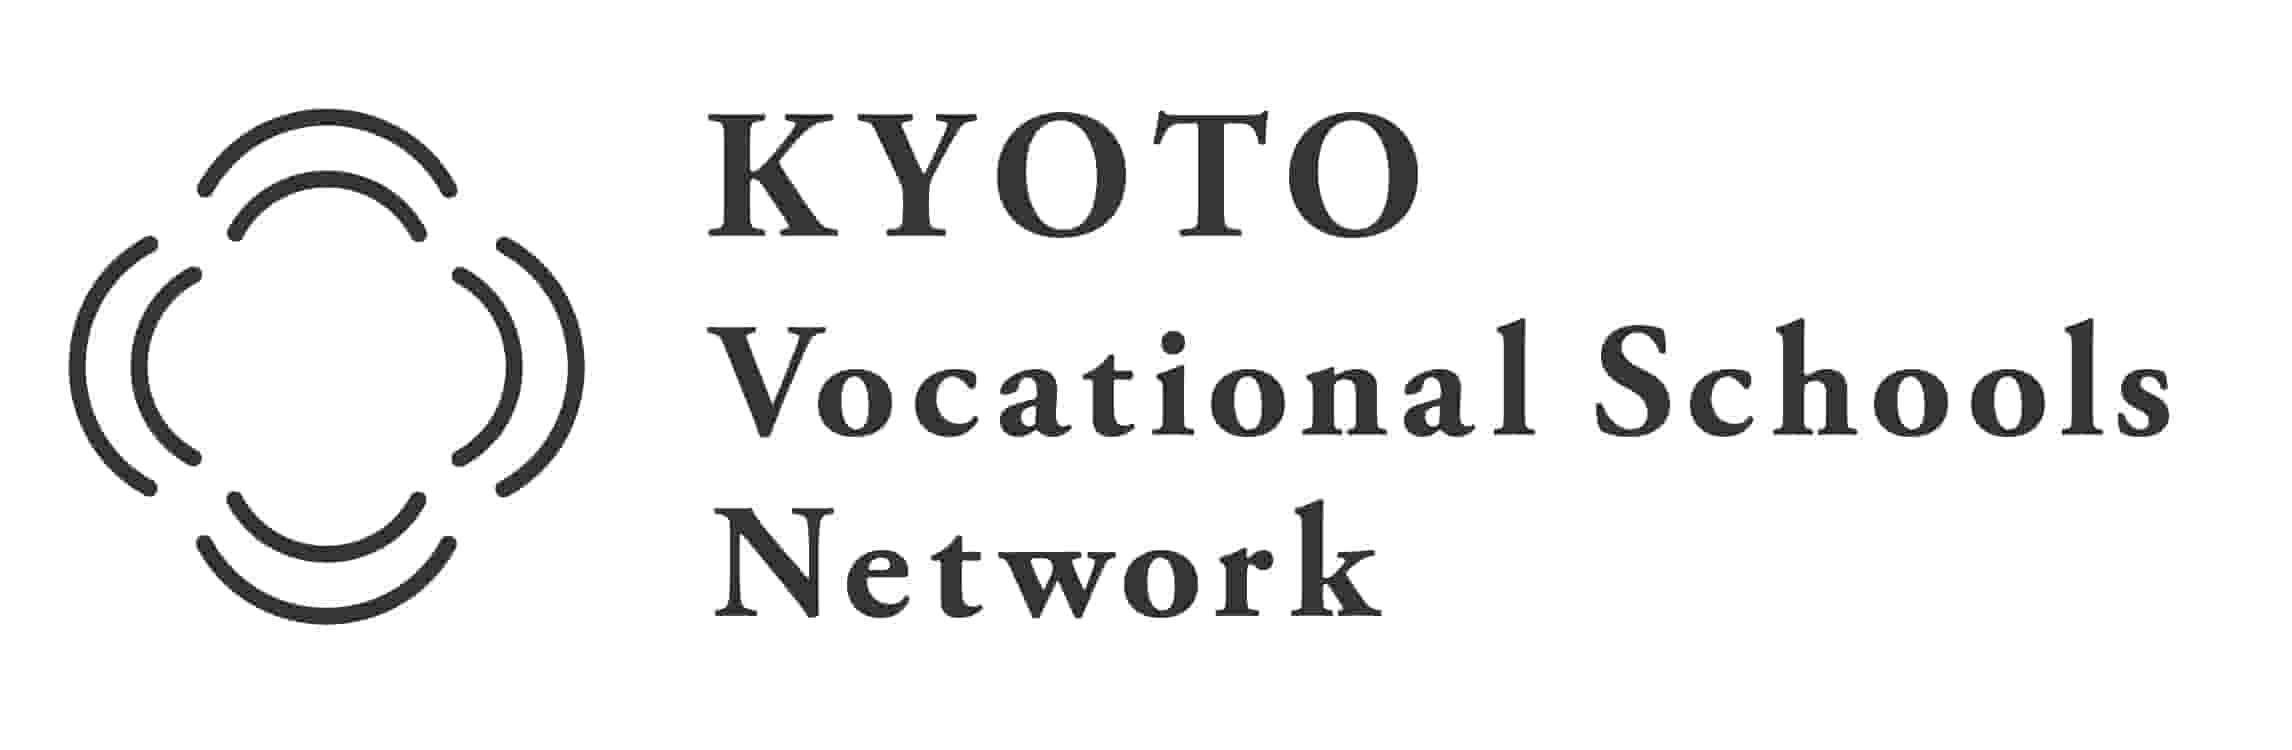 KYOTO Vocational Schools Network